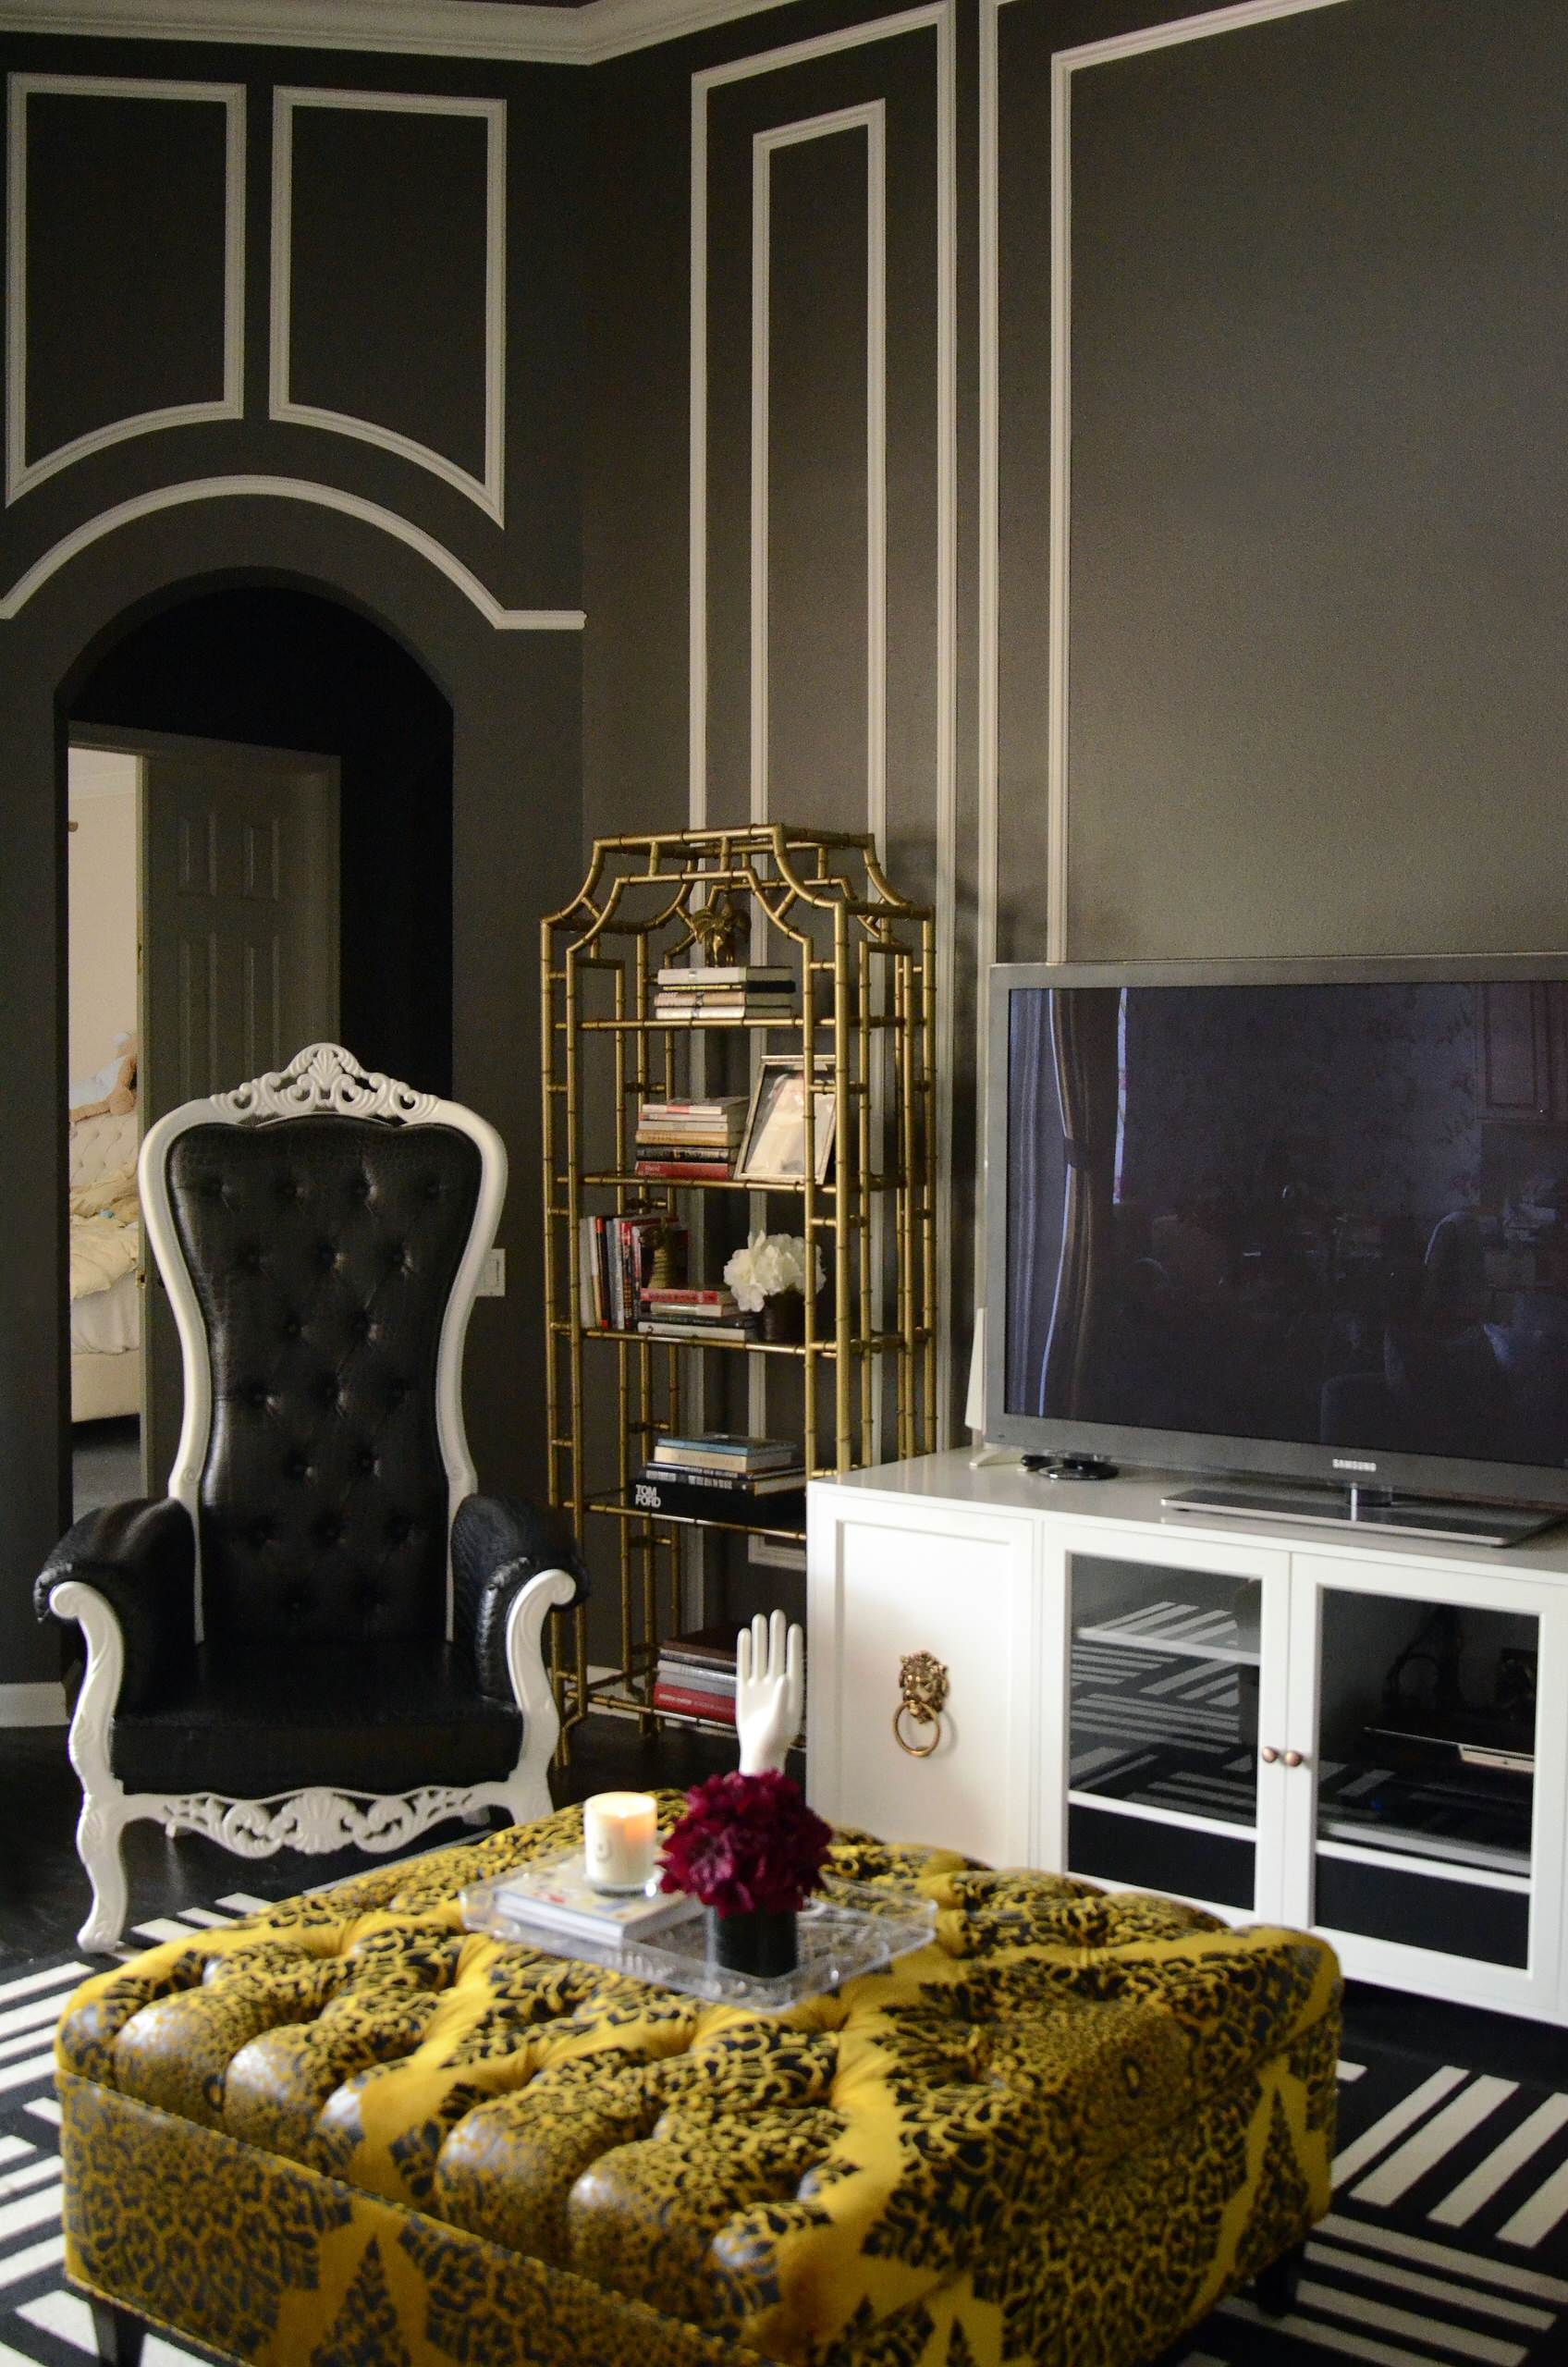 30 Hollywood Regency Living Room Ideas to Feel Like a Star - Foter